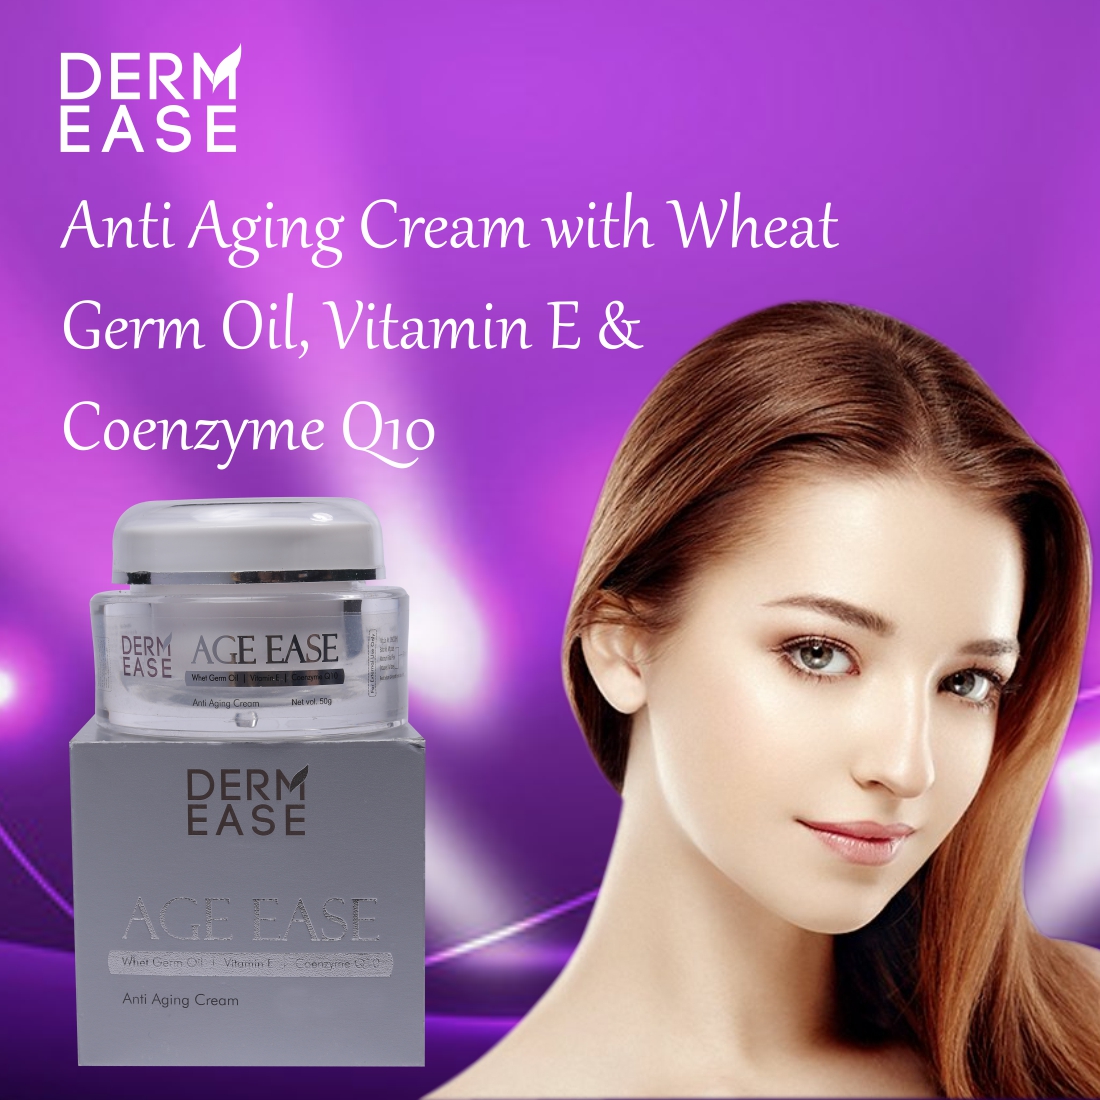 DERM EASE Age Ease Anti Aging Cream Combo